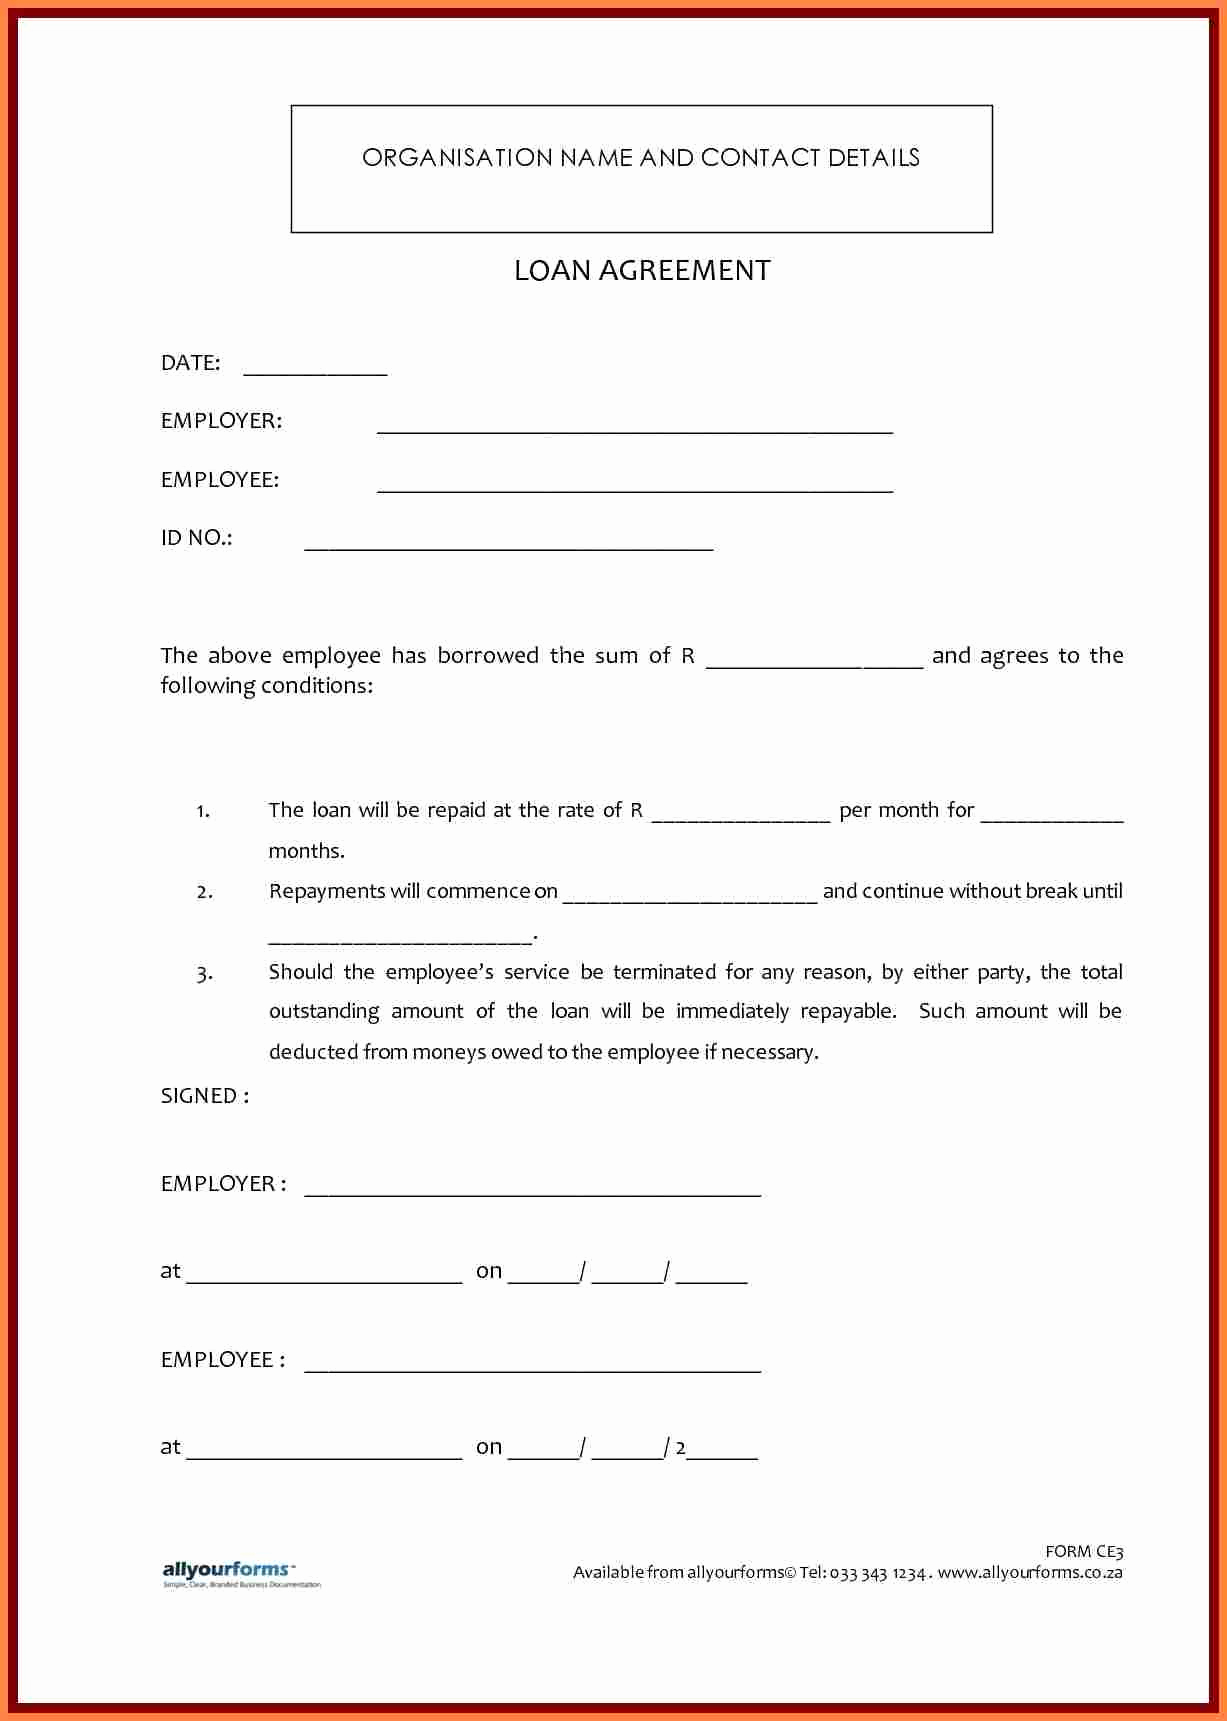 Personal Loan Agreement Between Friends Unique 8 Personal Loan Agreement Between Friends